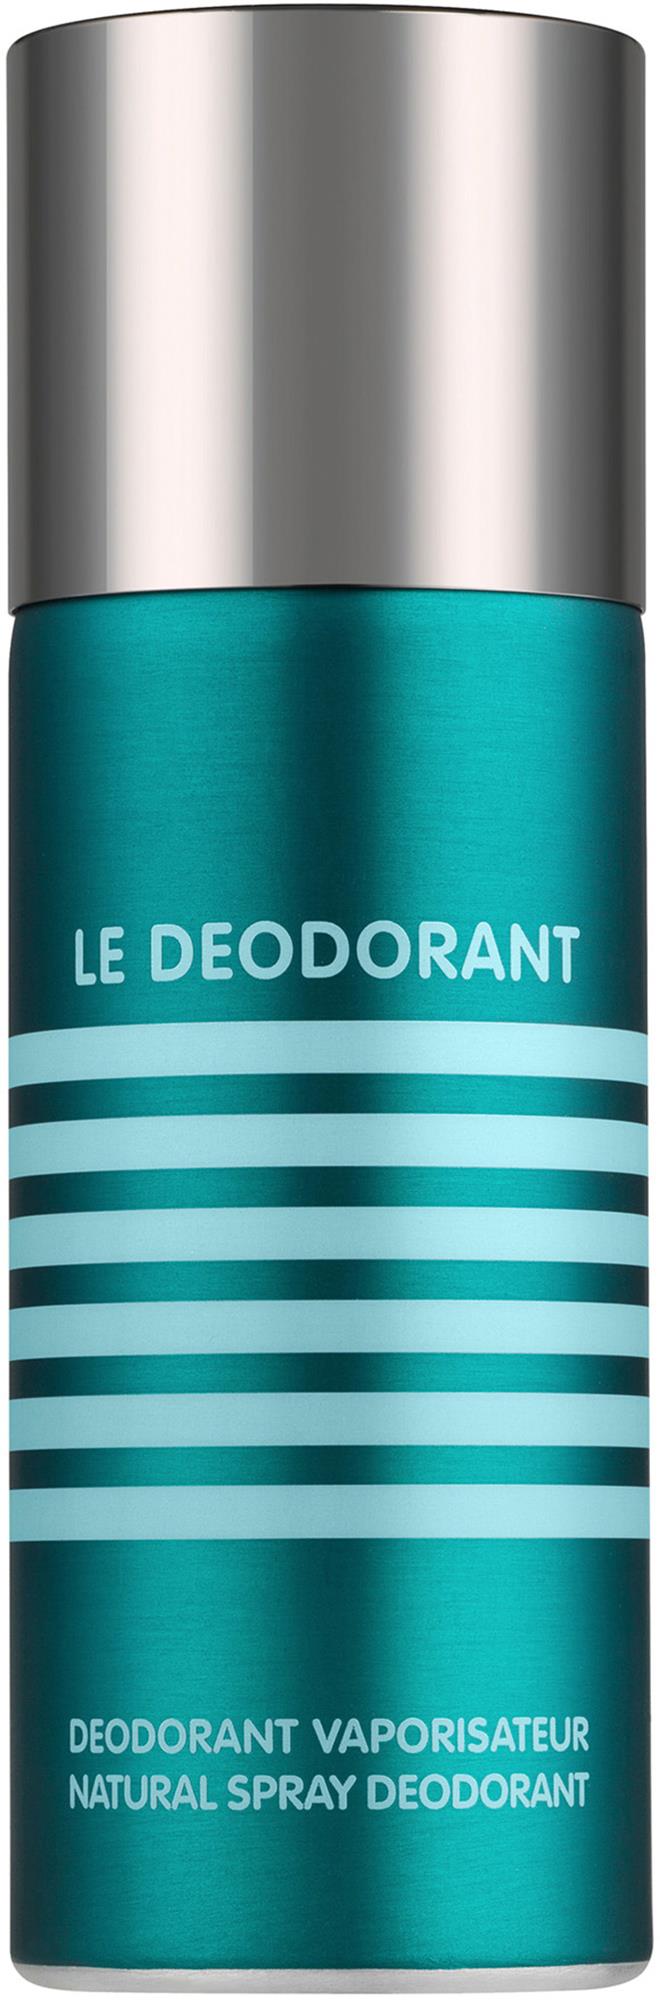 Le Male Spray Deodorant for Men